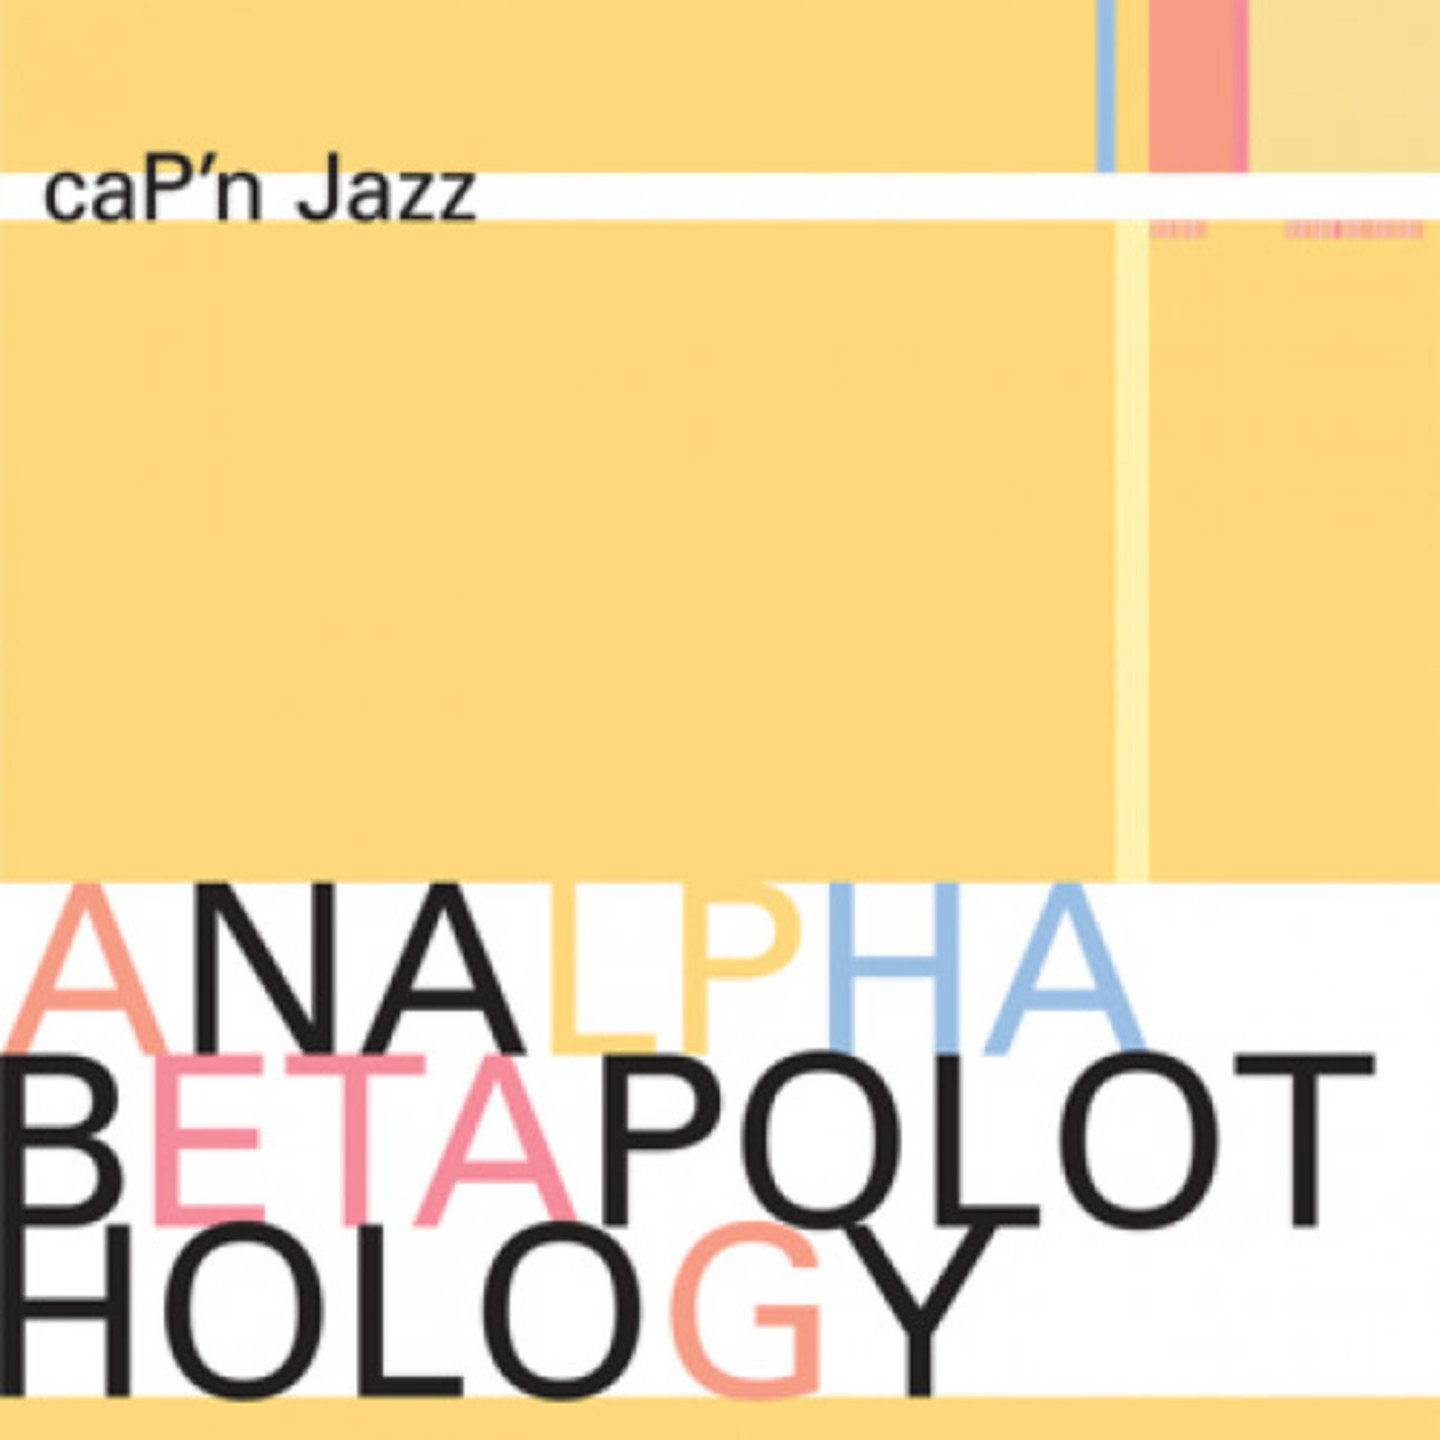 CAPN JAZZ - Analphabetapolothology 2xLP 180g